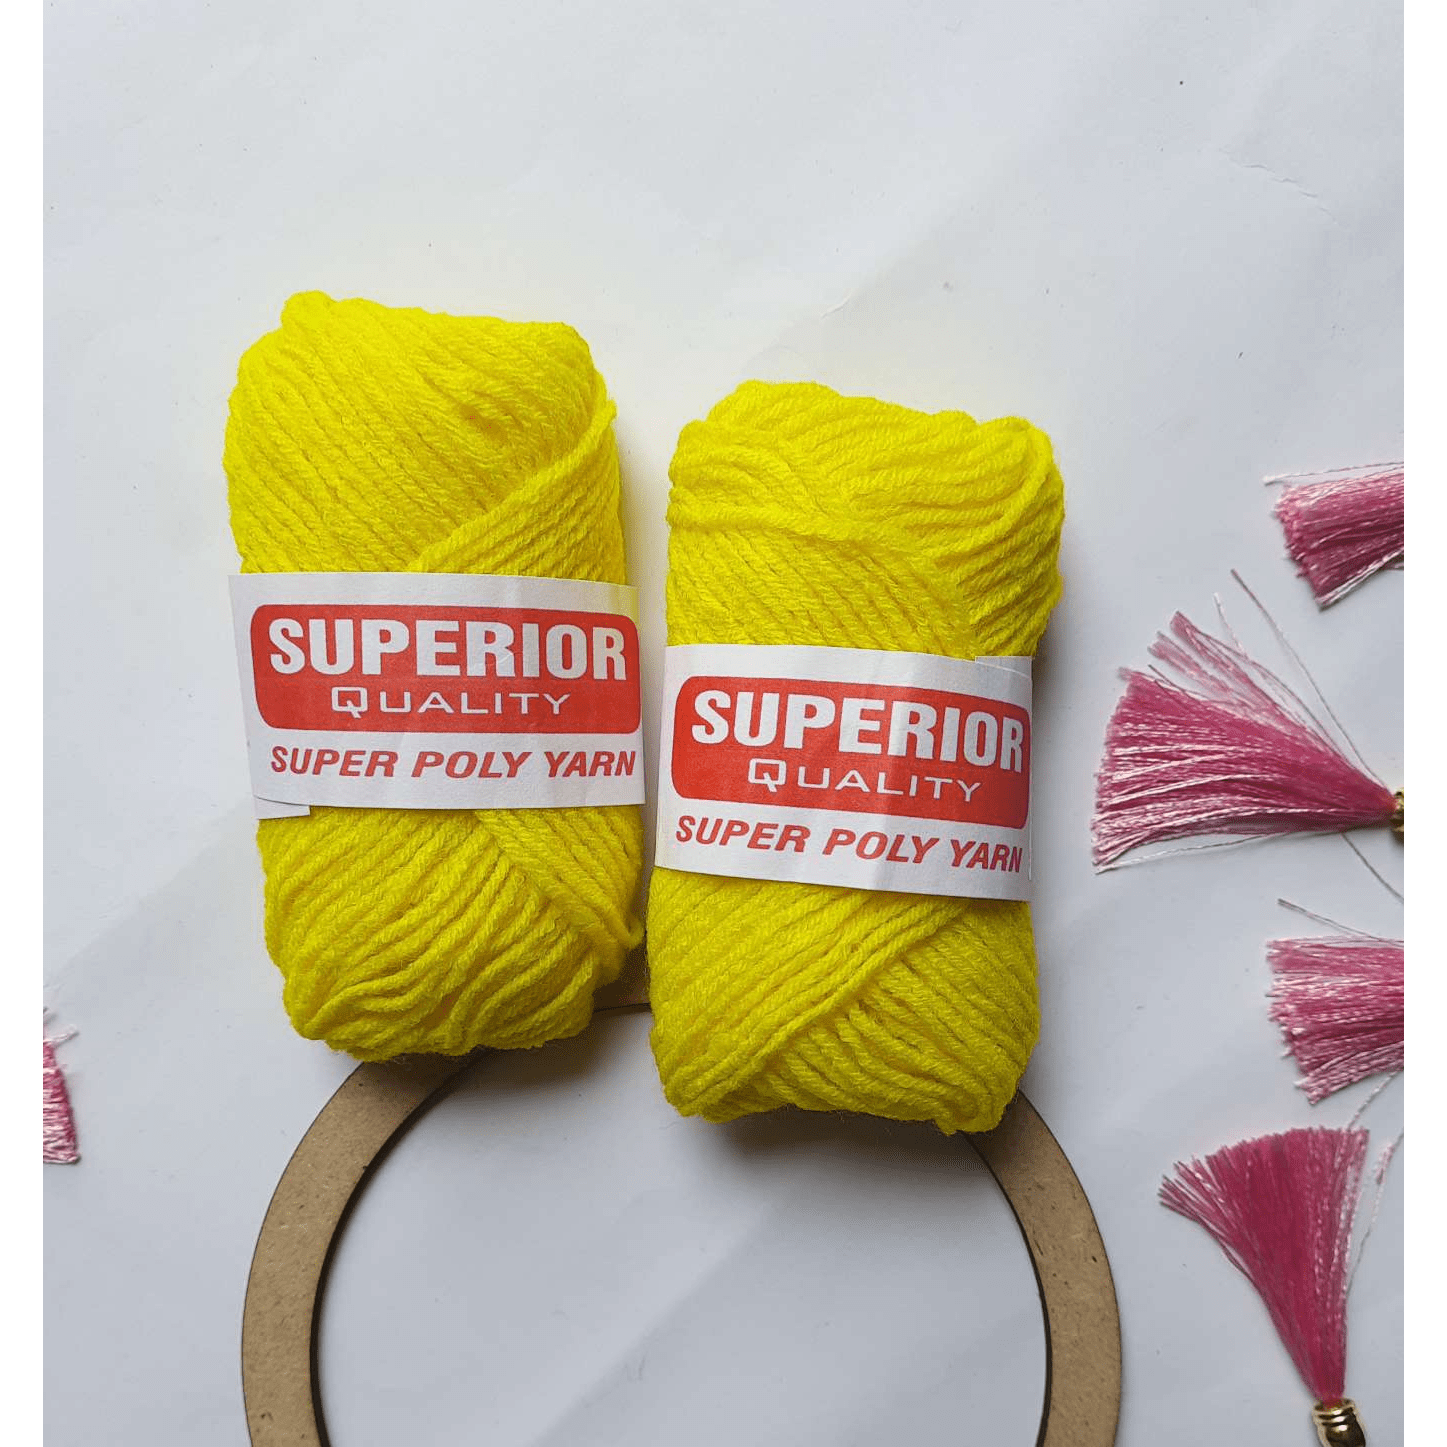 Rosy Green Wool Cheeky Merino Joy Yarn - ON SALE! - Colorful Yarns Store